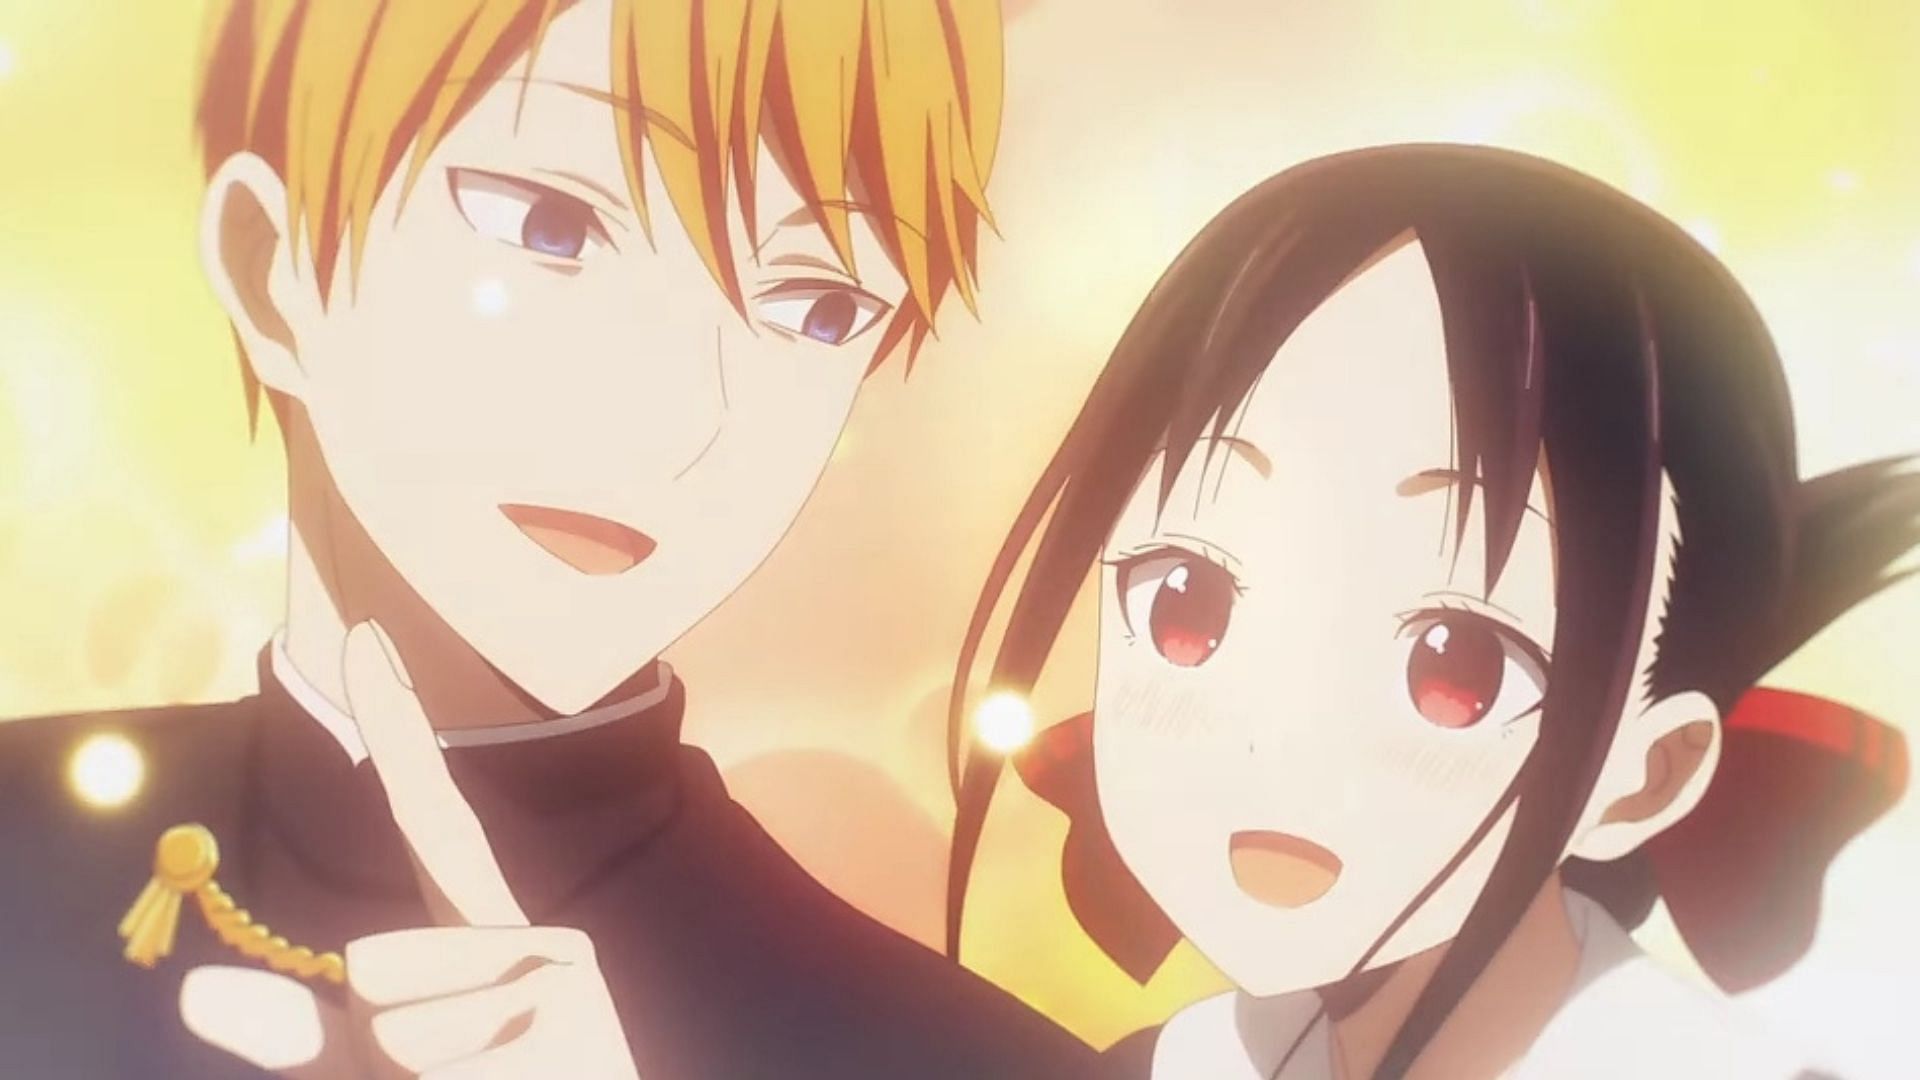 Kaguya and Miyuki as seen in the Kaguya-sama: Love Is War anime (Image via A-1 Pictures)